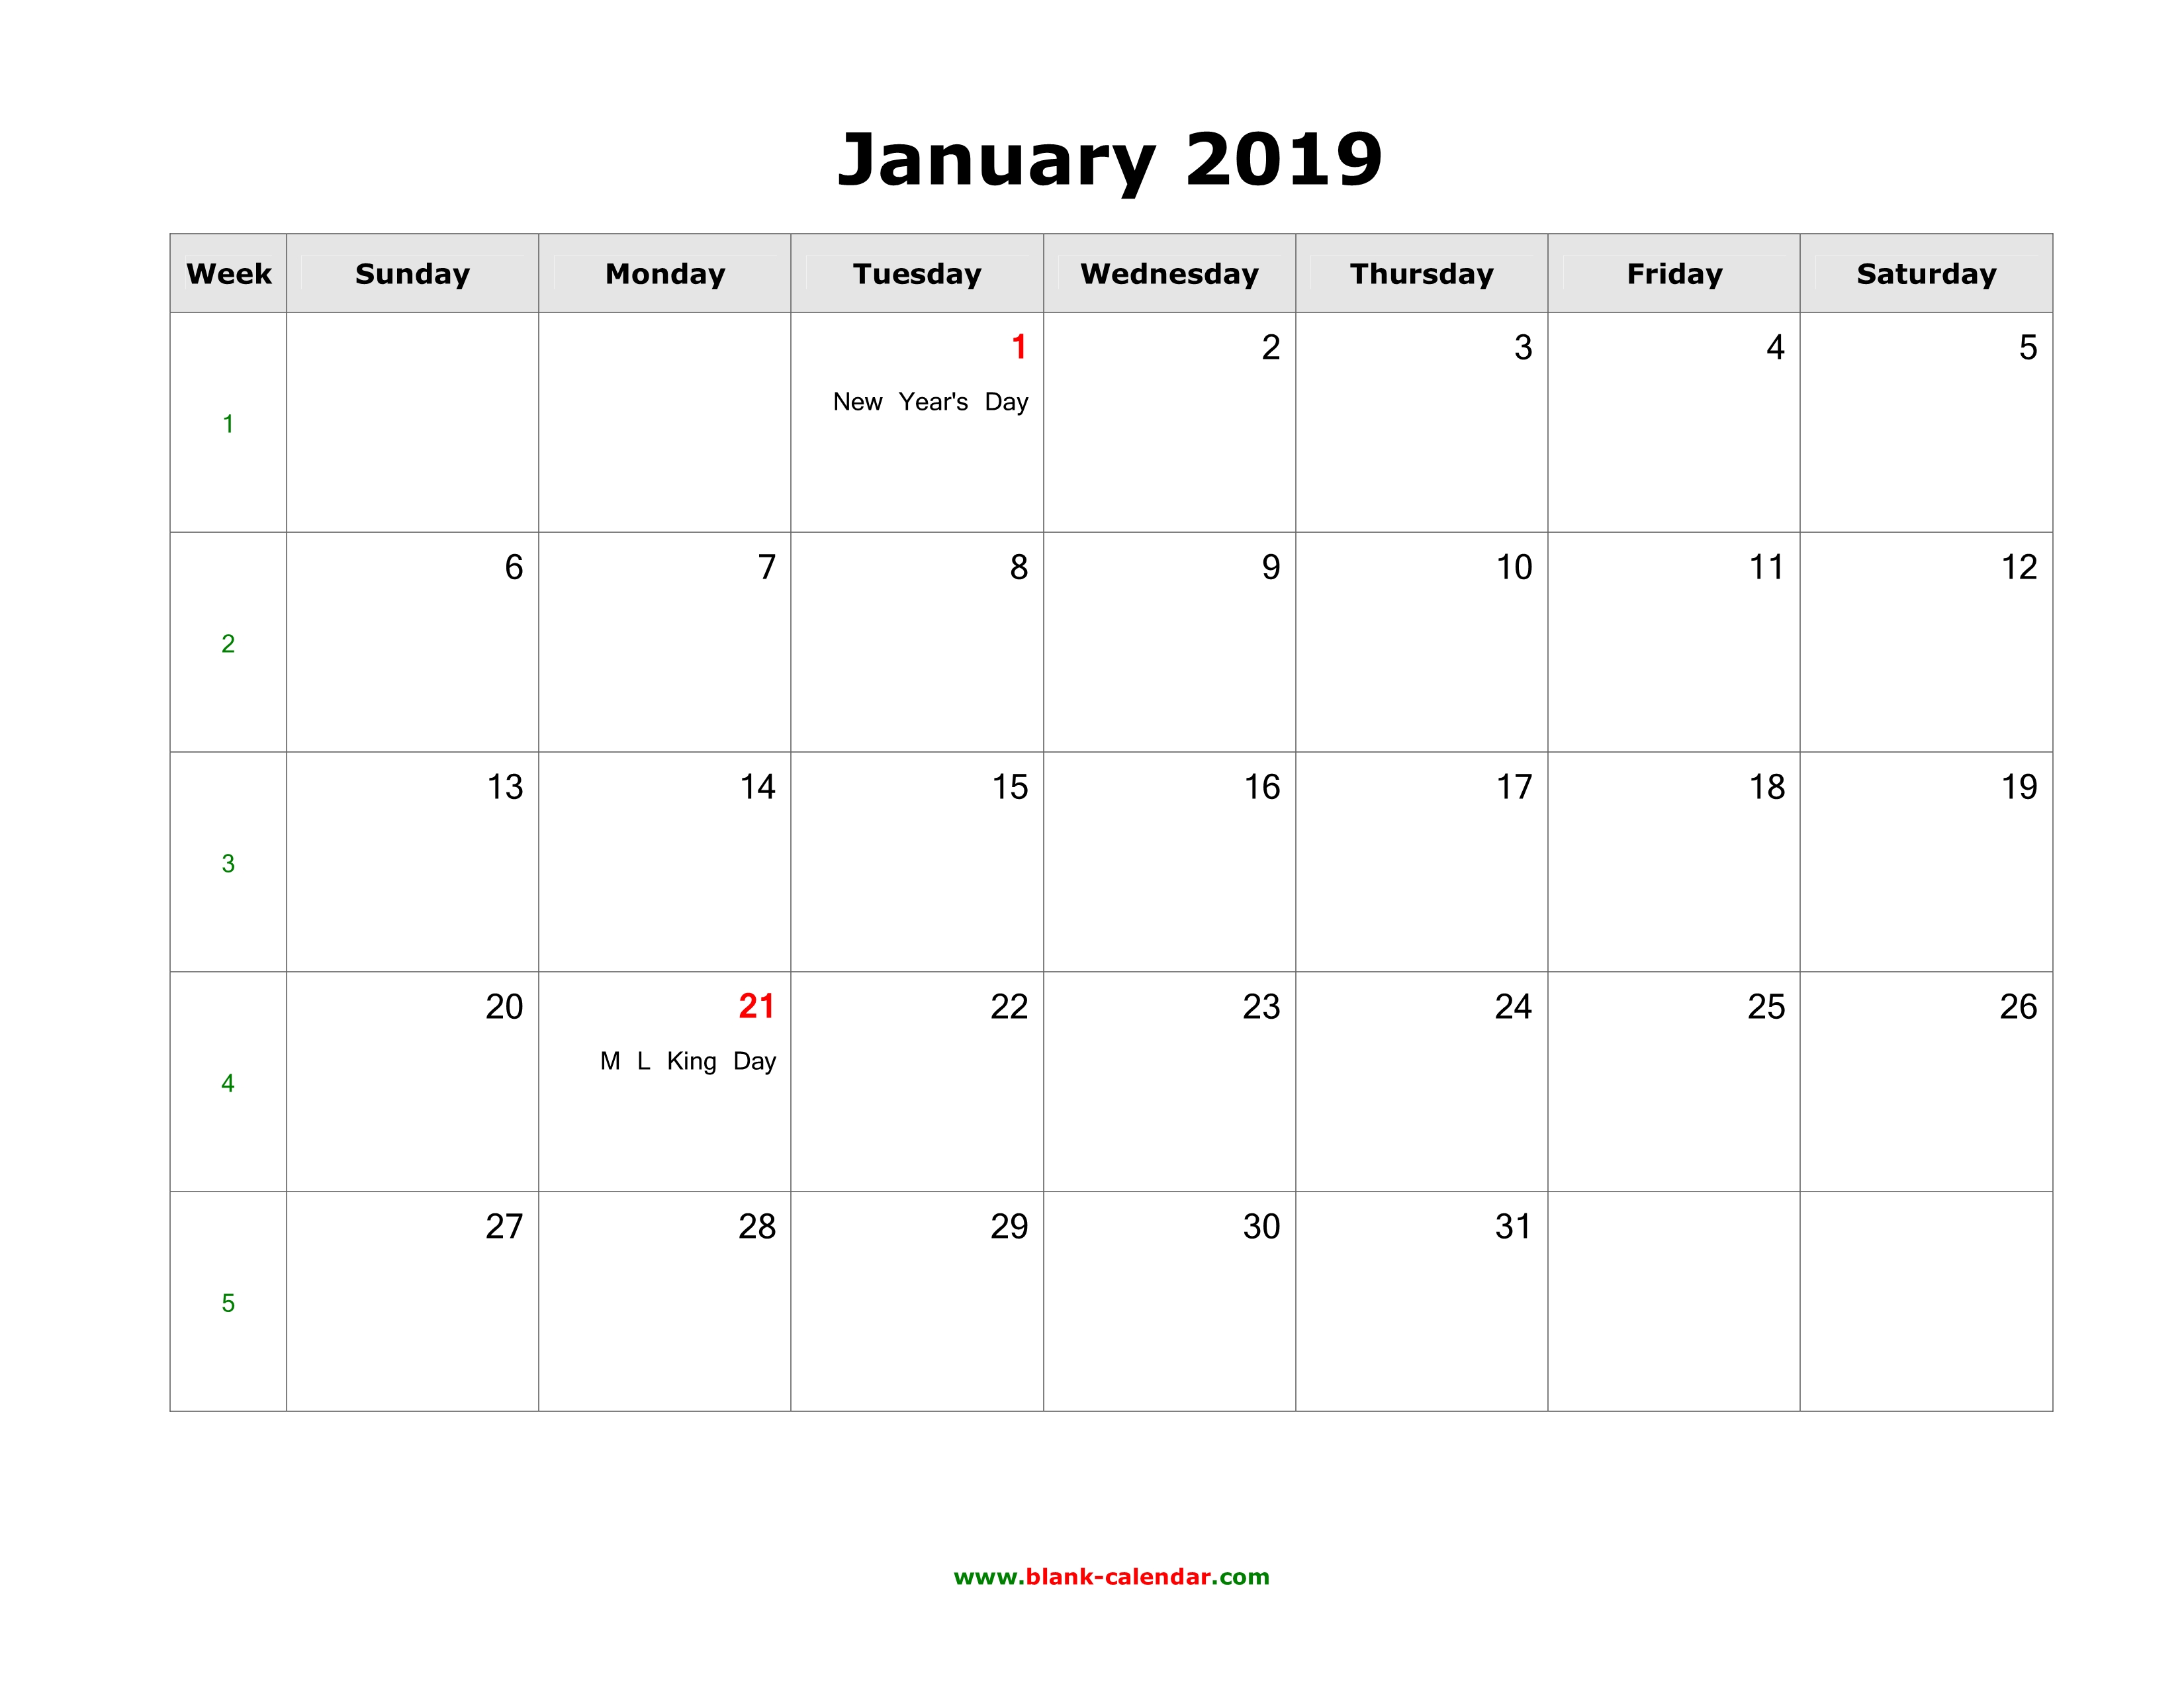 January 19 Blank Calendar Free Download Calendar Templates